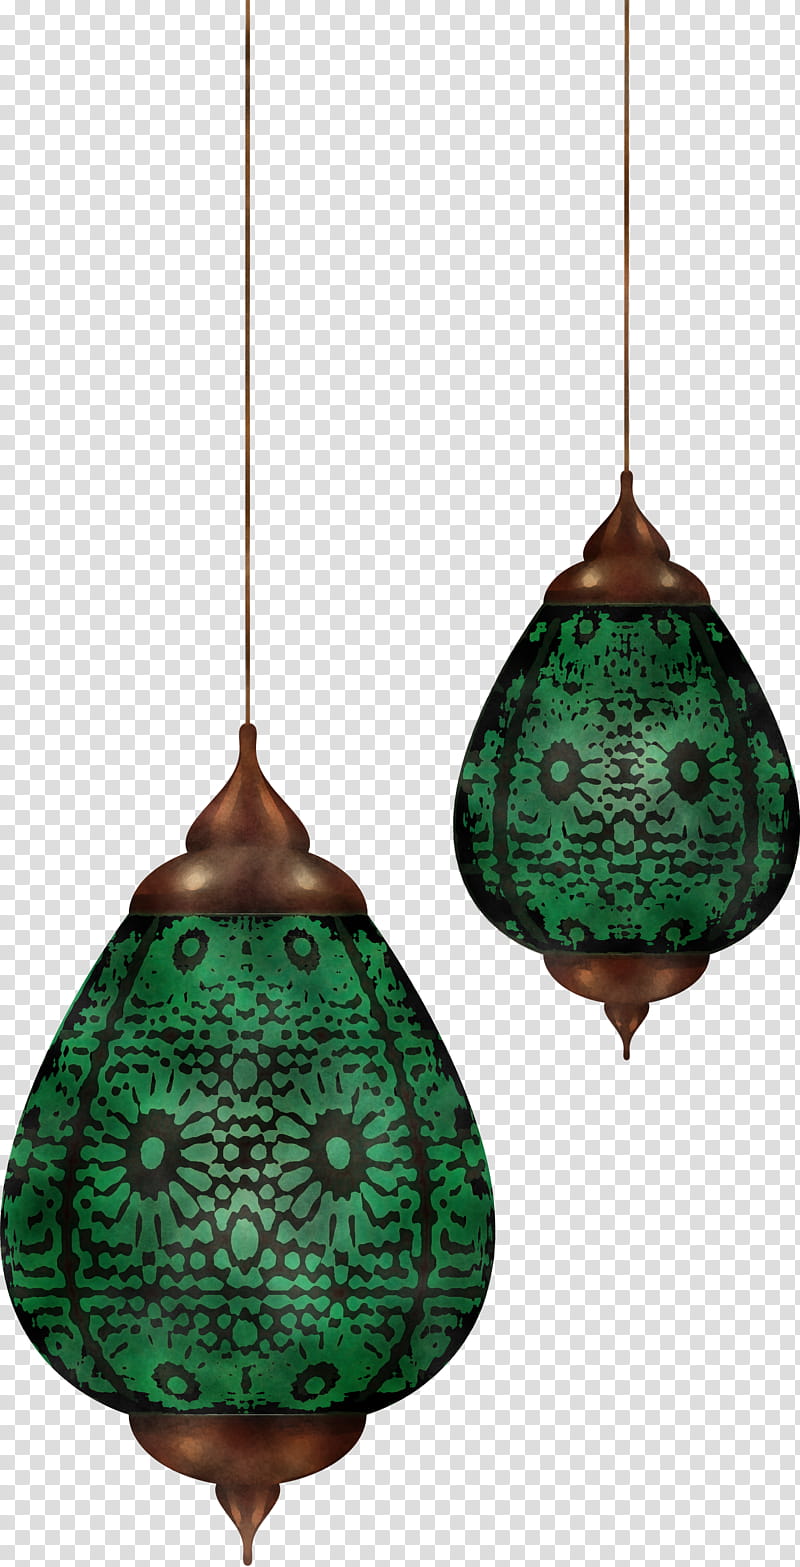 Ramadan Lantern ramadan kareem, Christmas Ornament, Lighting, Holiday Ornament, Light Fixture, Interior Design, Christmas Decoration transparent background PNG clipart